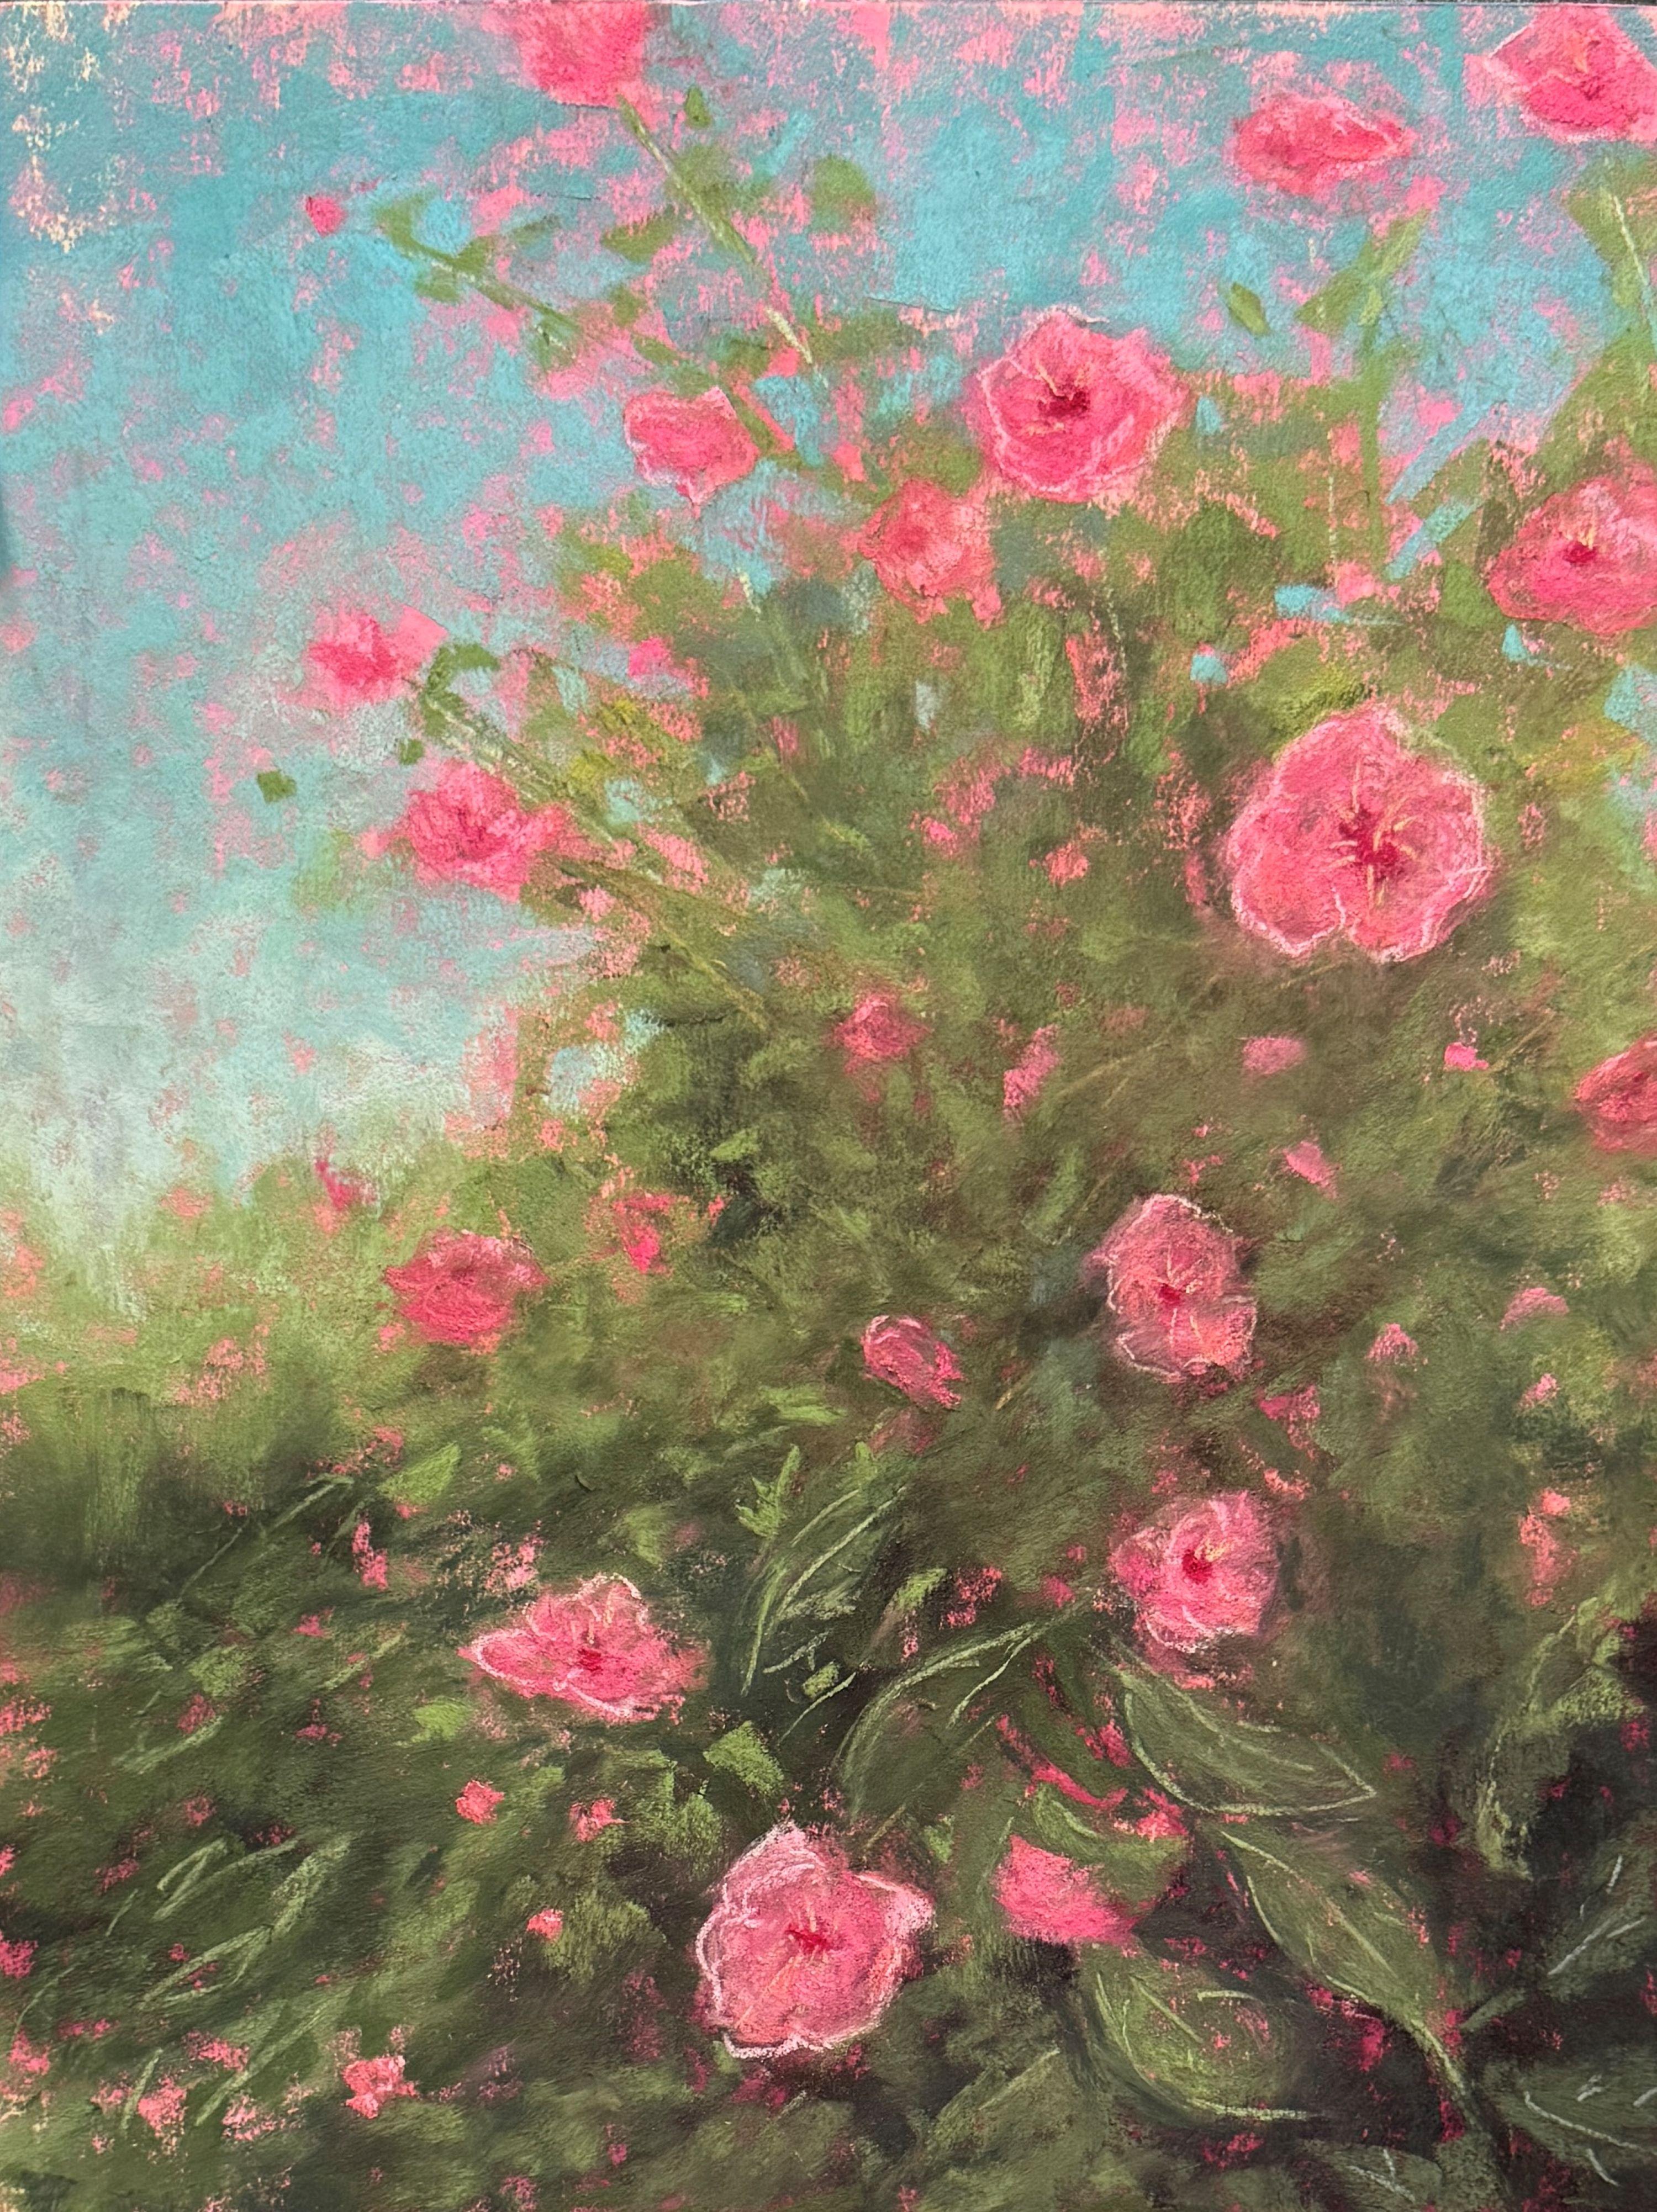 Still-Life Painting Dina Gardner - Island Girls - Peinture impressionniste au pastel de fleurs